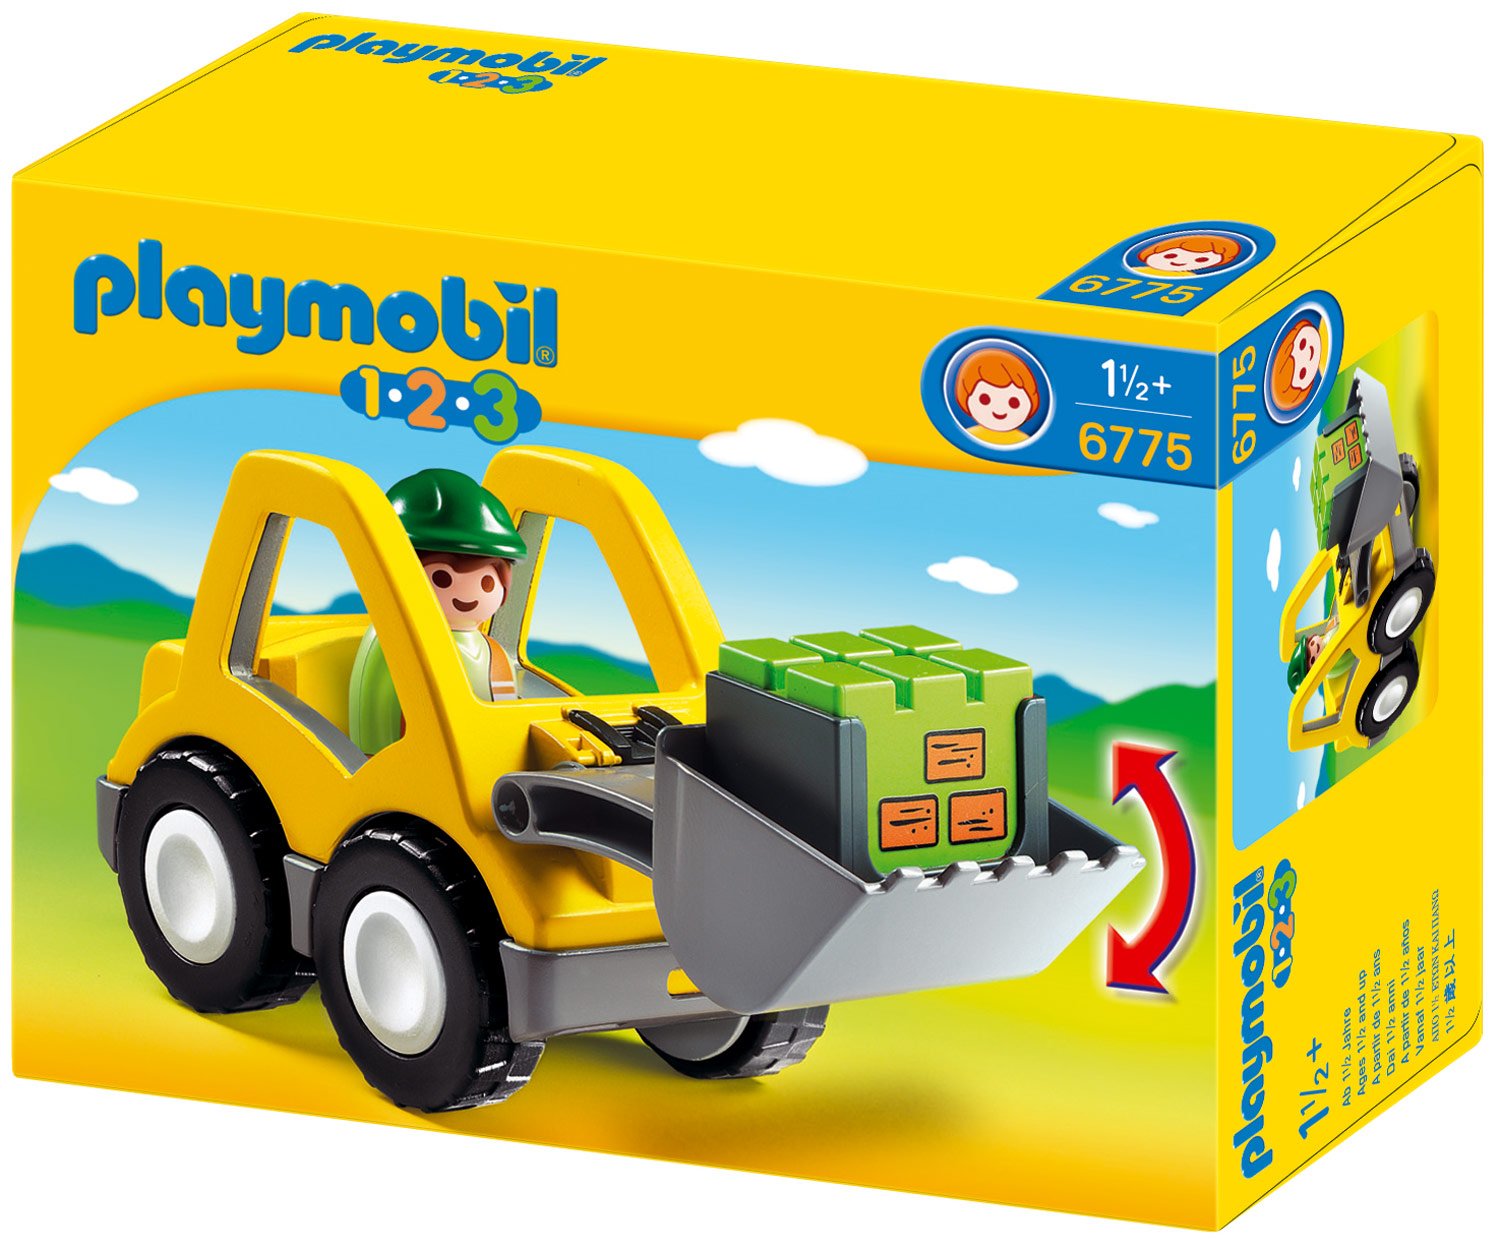 Playmobil 6775 1.2.3 Front Loader